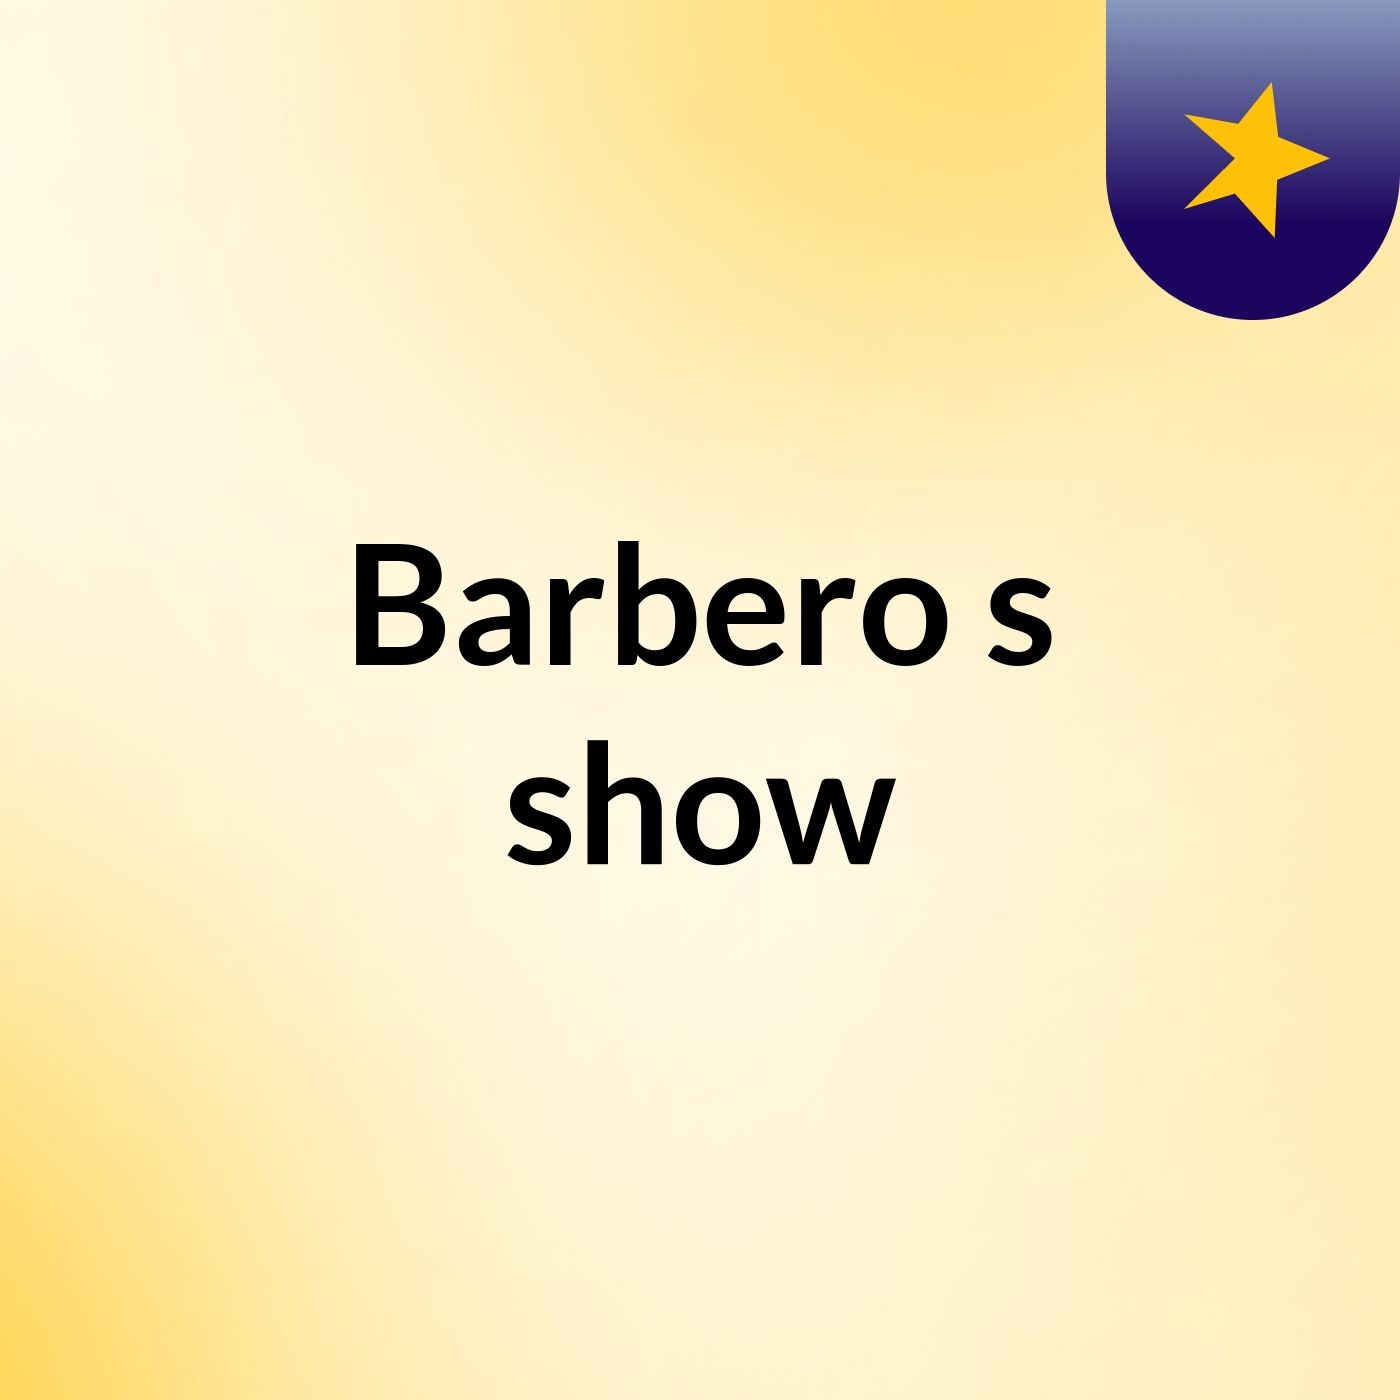 Barbero's show